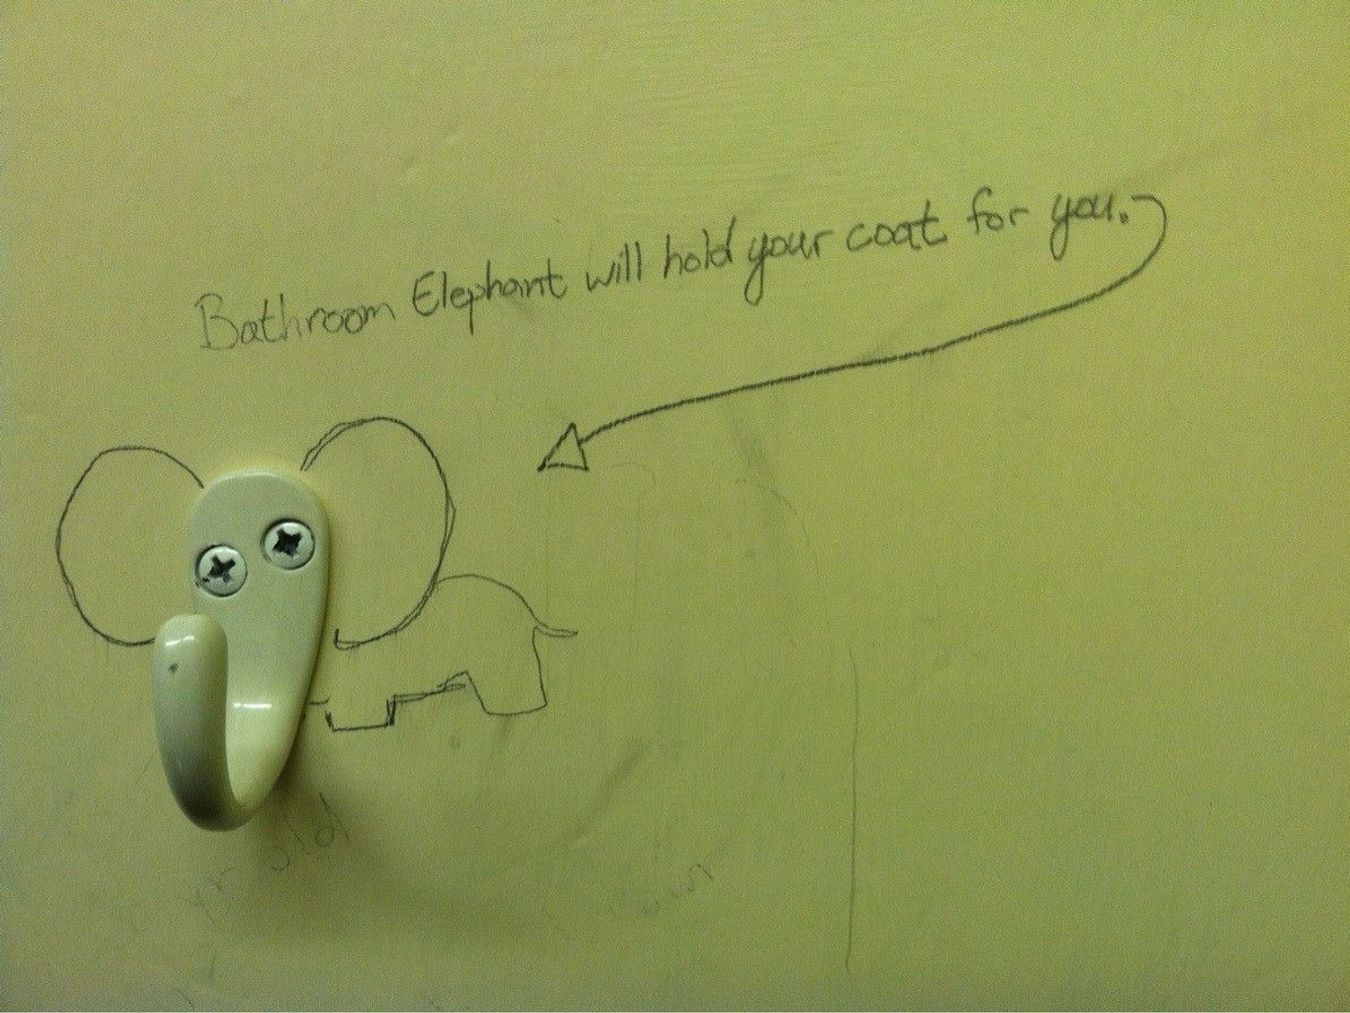 bathroom-elephant__16b60f9842-1.jpeg